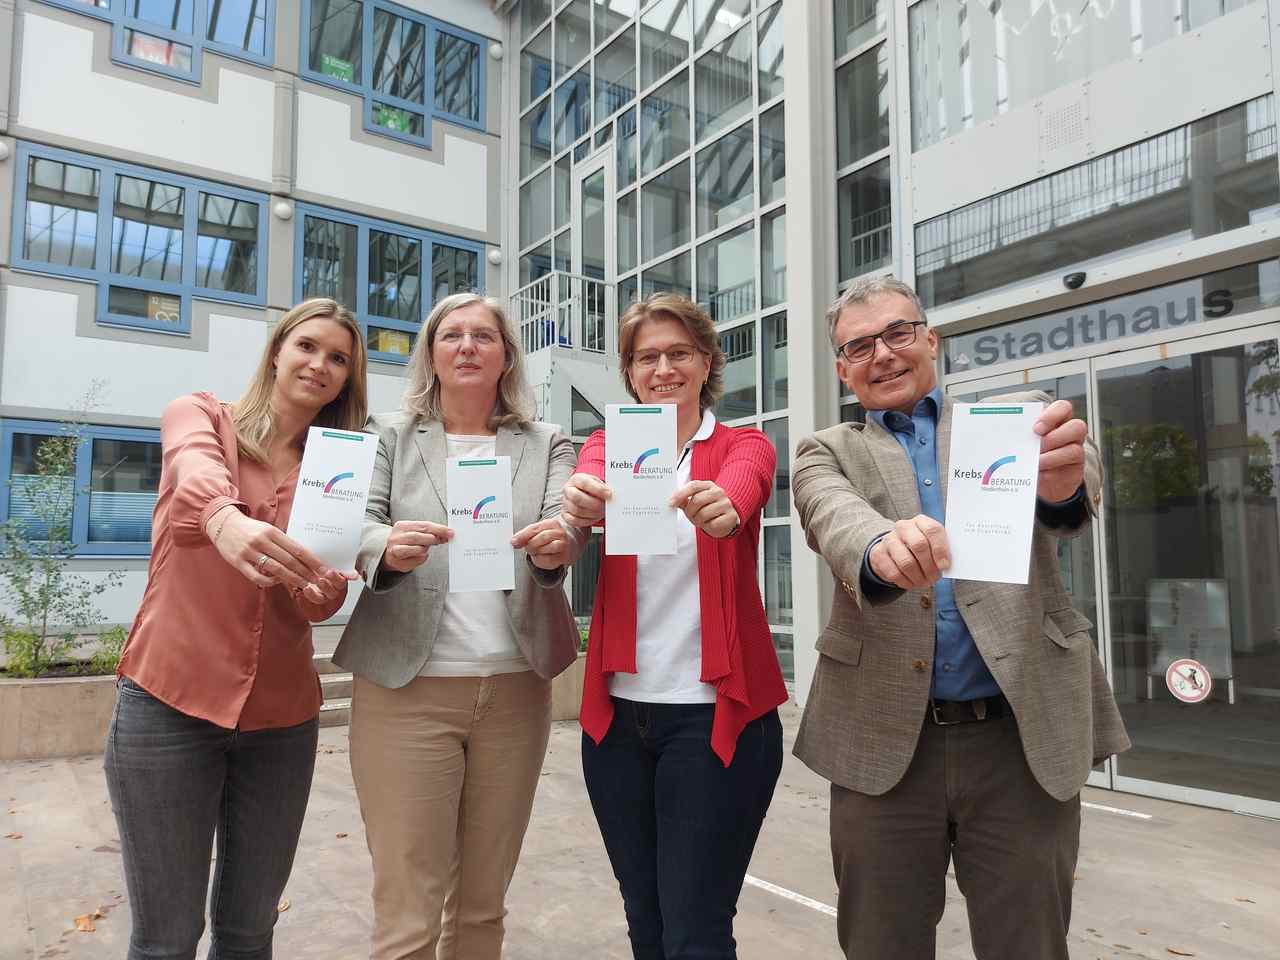 Rheinberger Bürgermeister unterstützt Krebsberatung